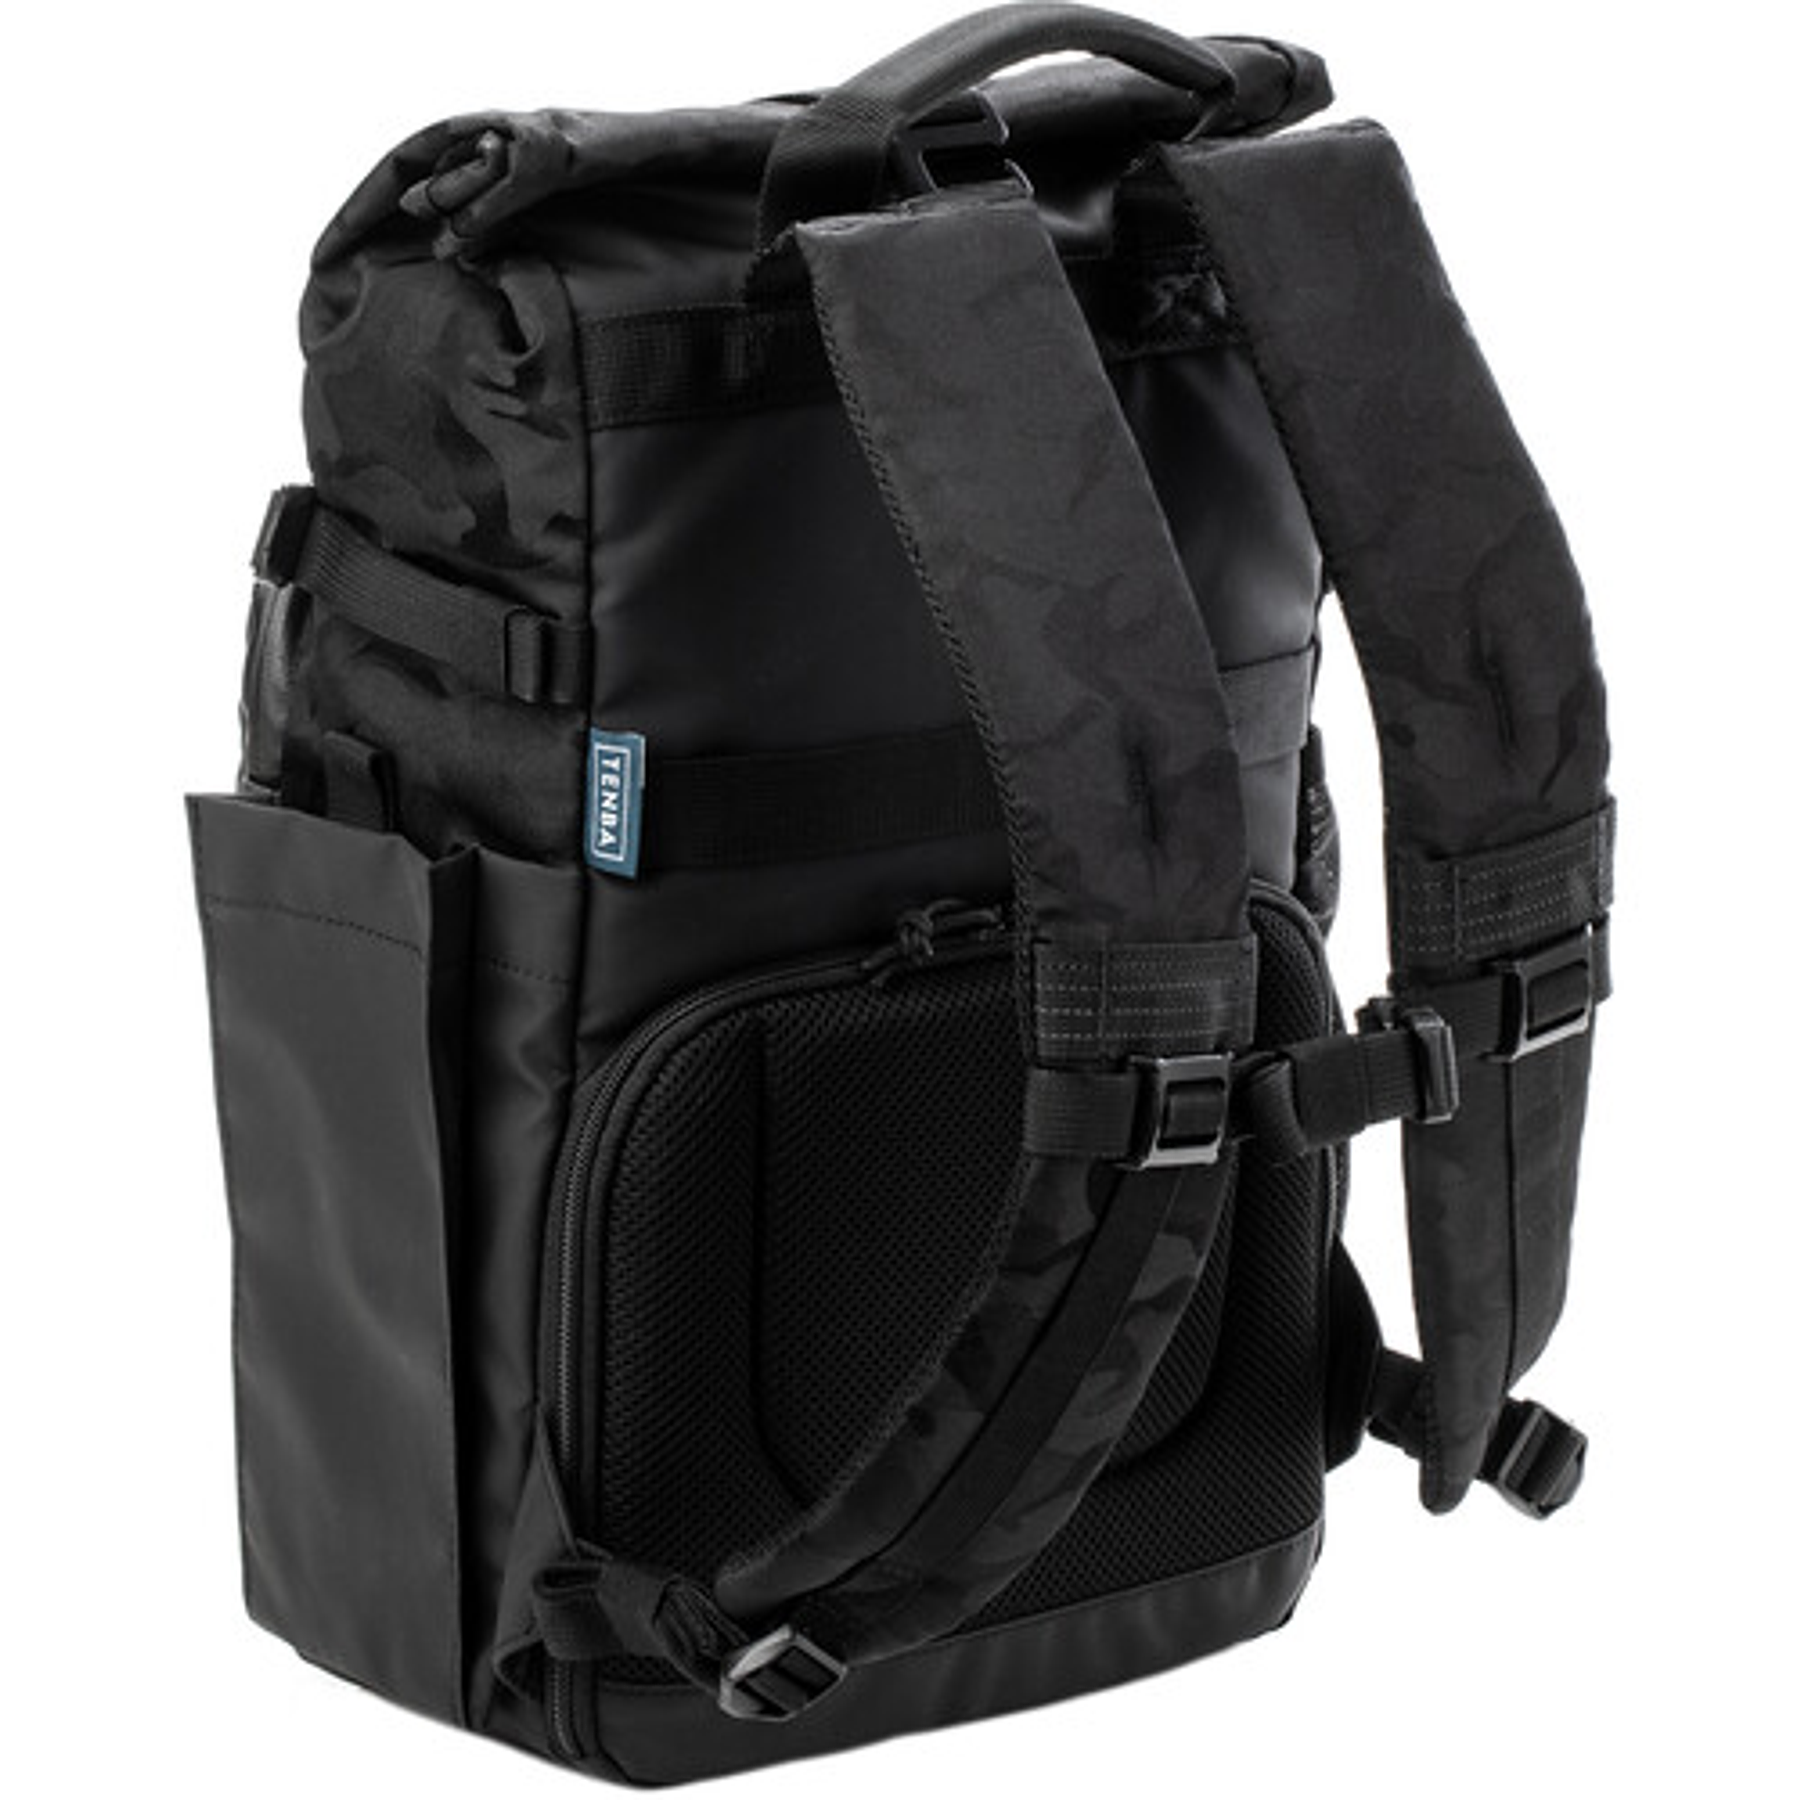 Tenba Fulton v2 14L Photo Backpack (Black/Black Camo)